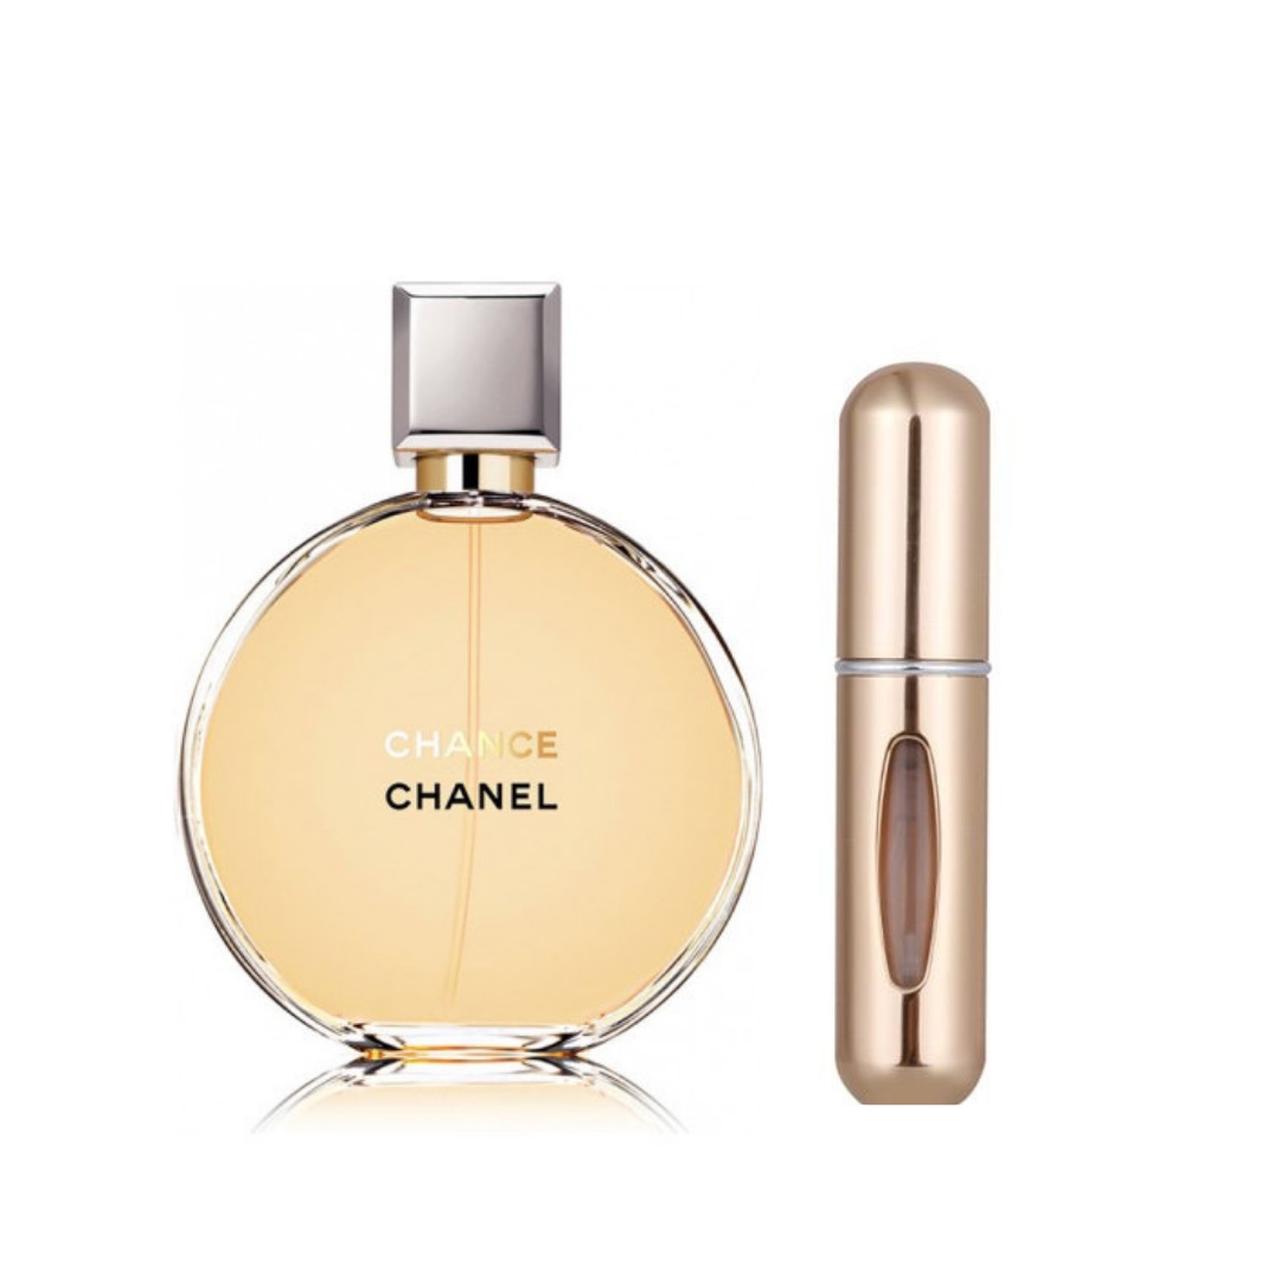 Chanel Chance Designer Perfume 5ml Refillable Travel... - Depop